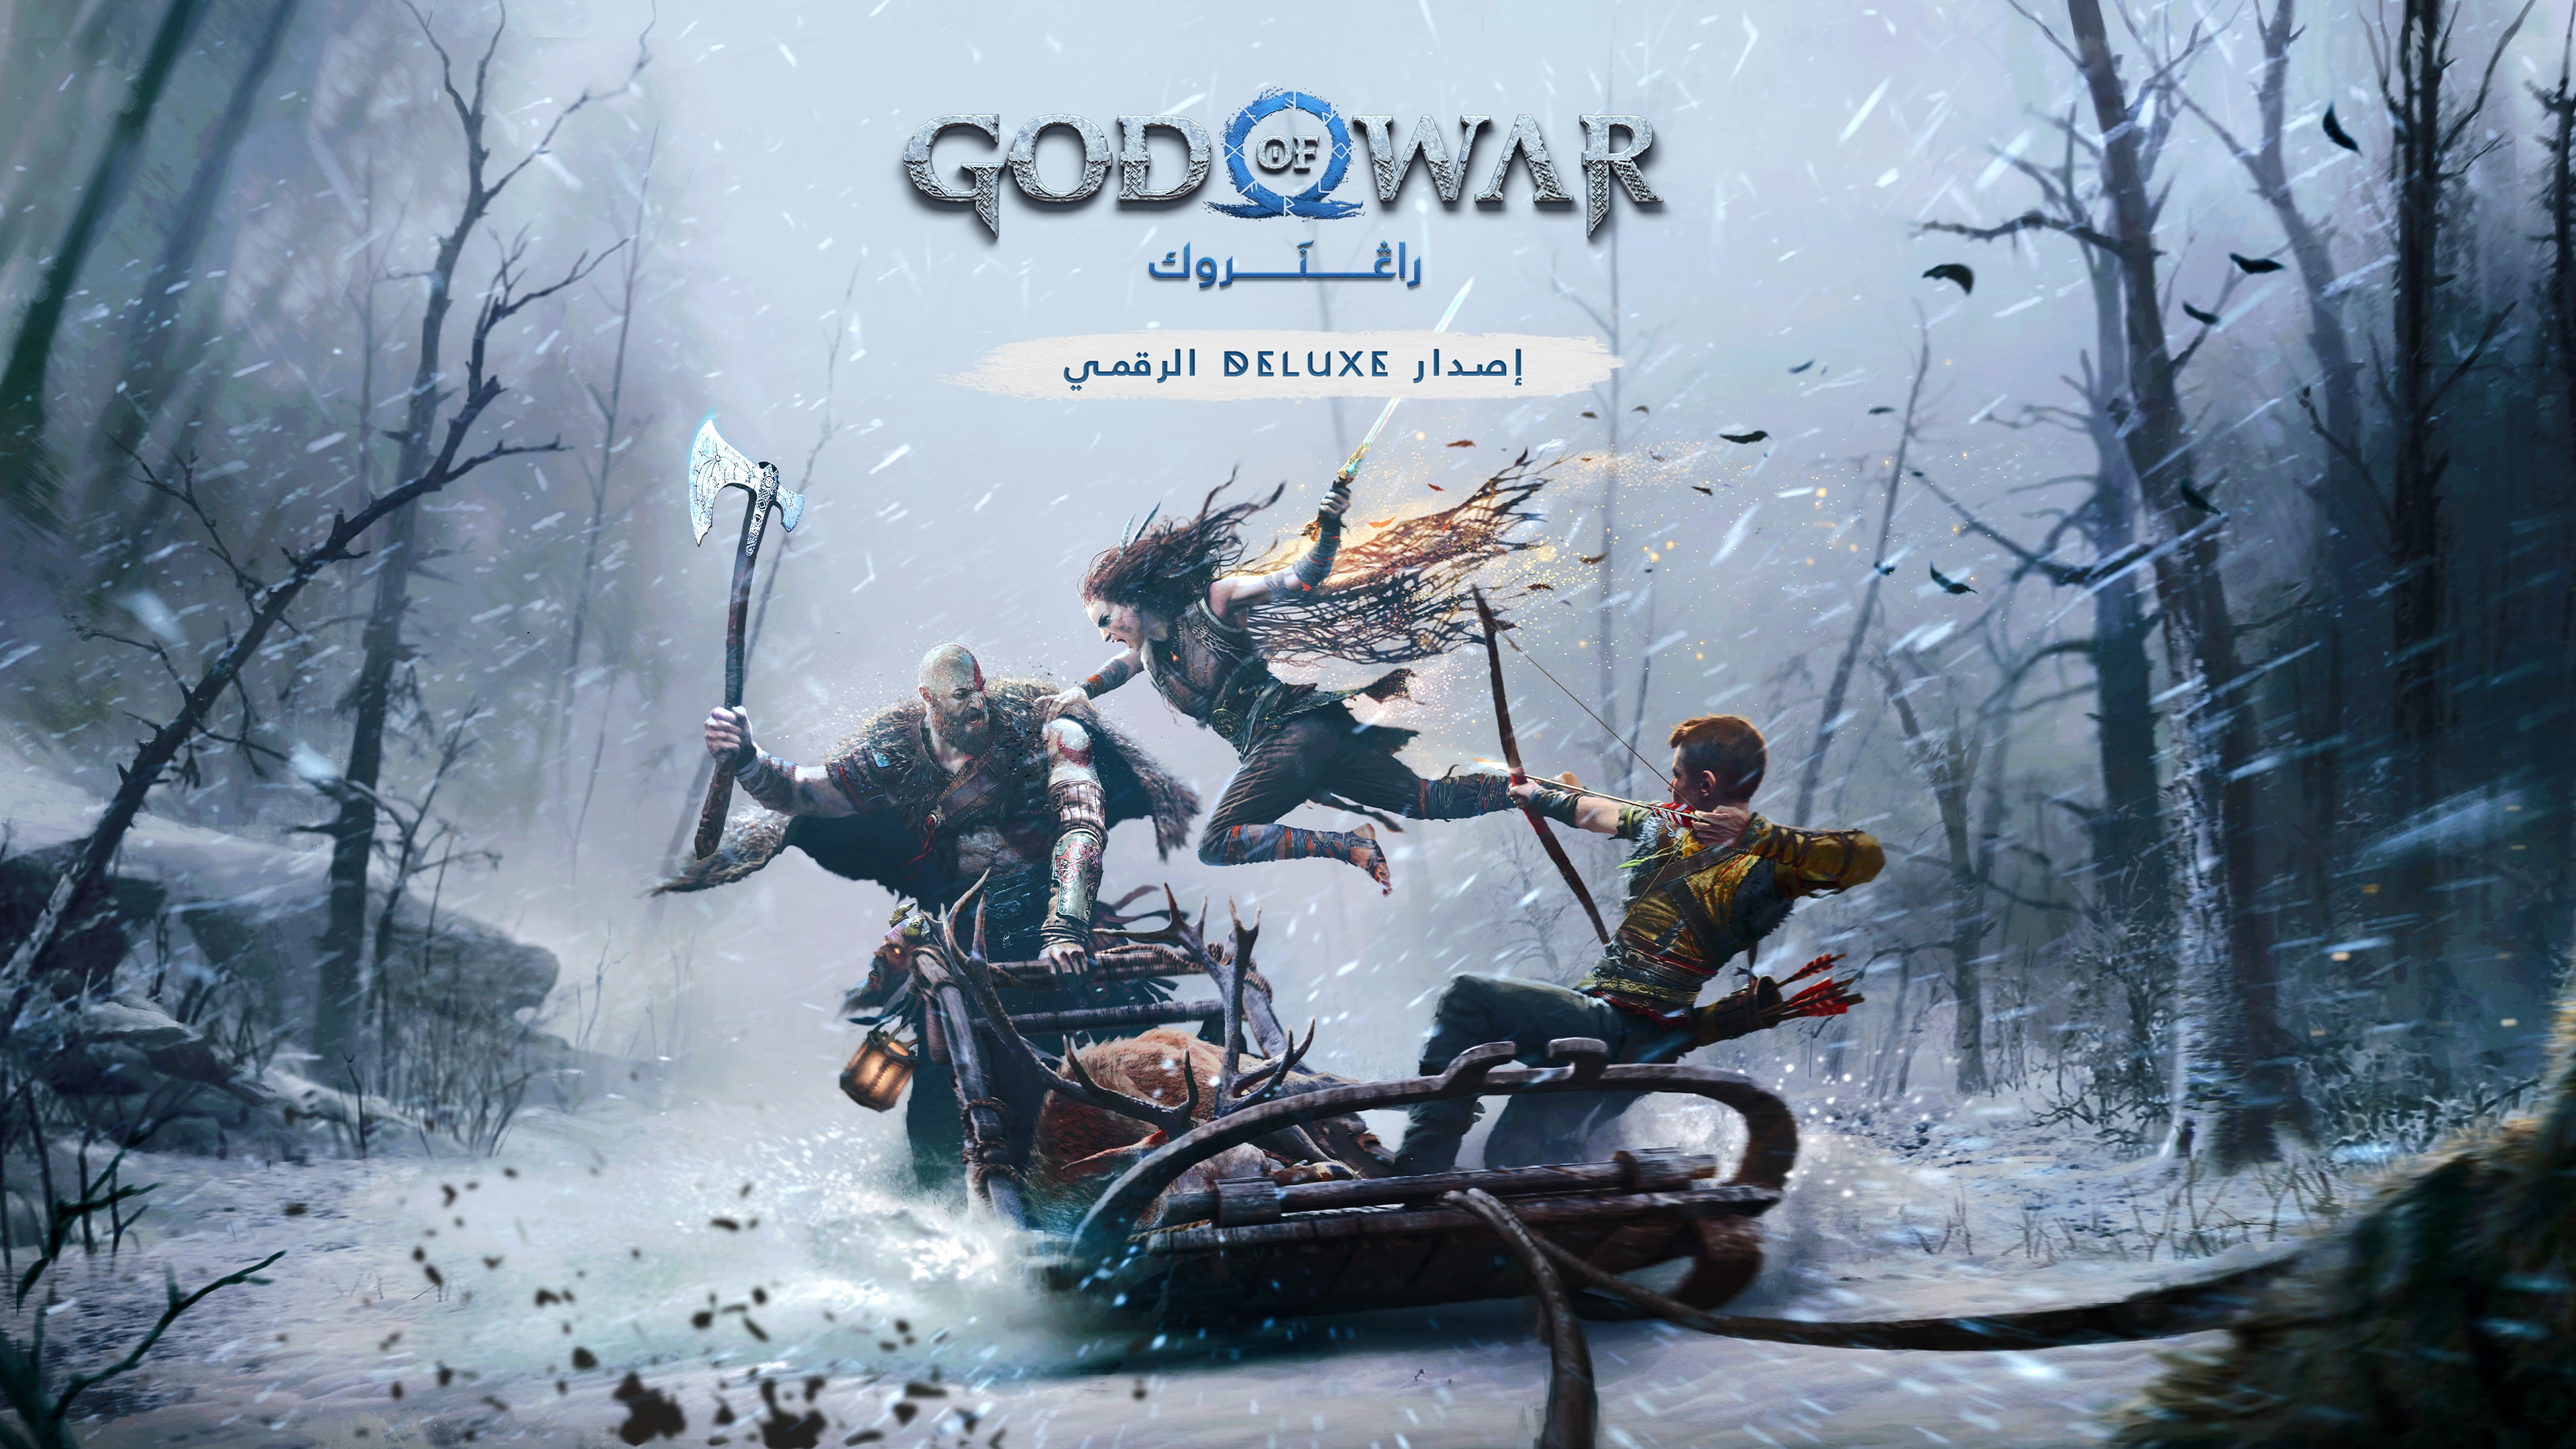 PS4 1TB GOD OF WAR RAGNAROK  Sony Store Argentina - Sony Store